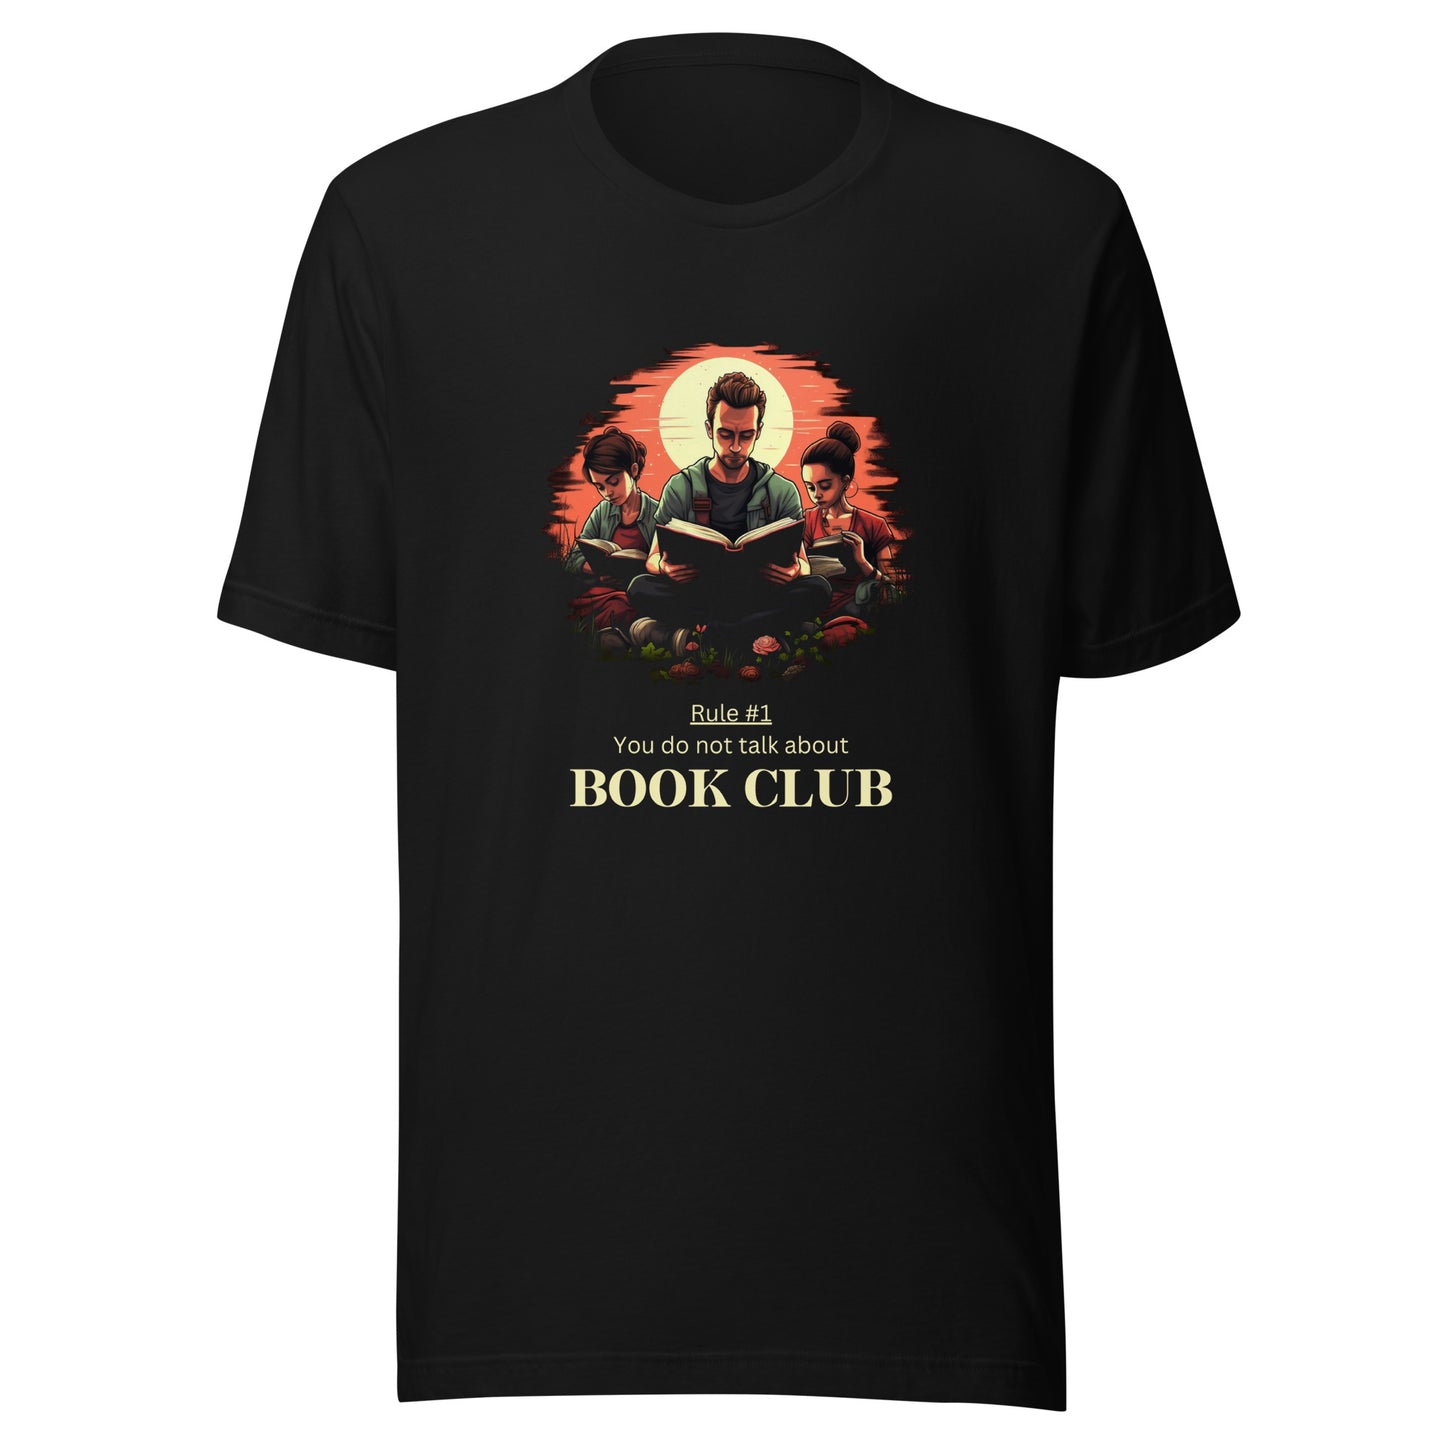 Book Club tee